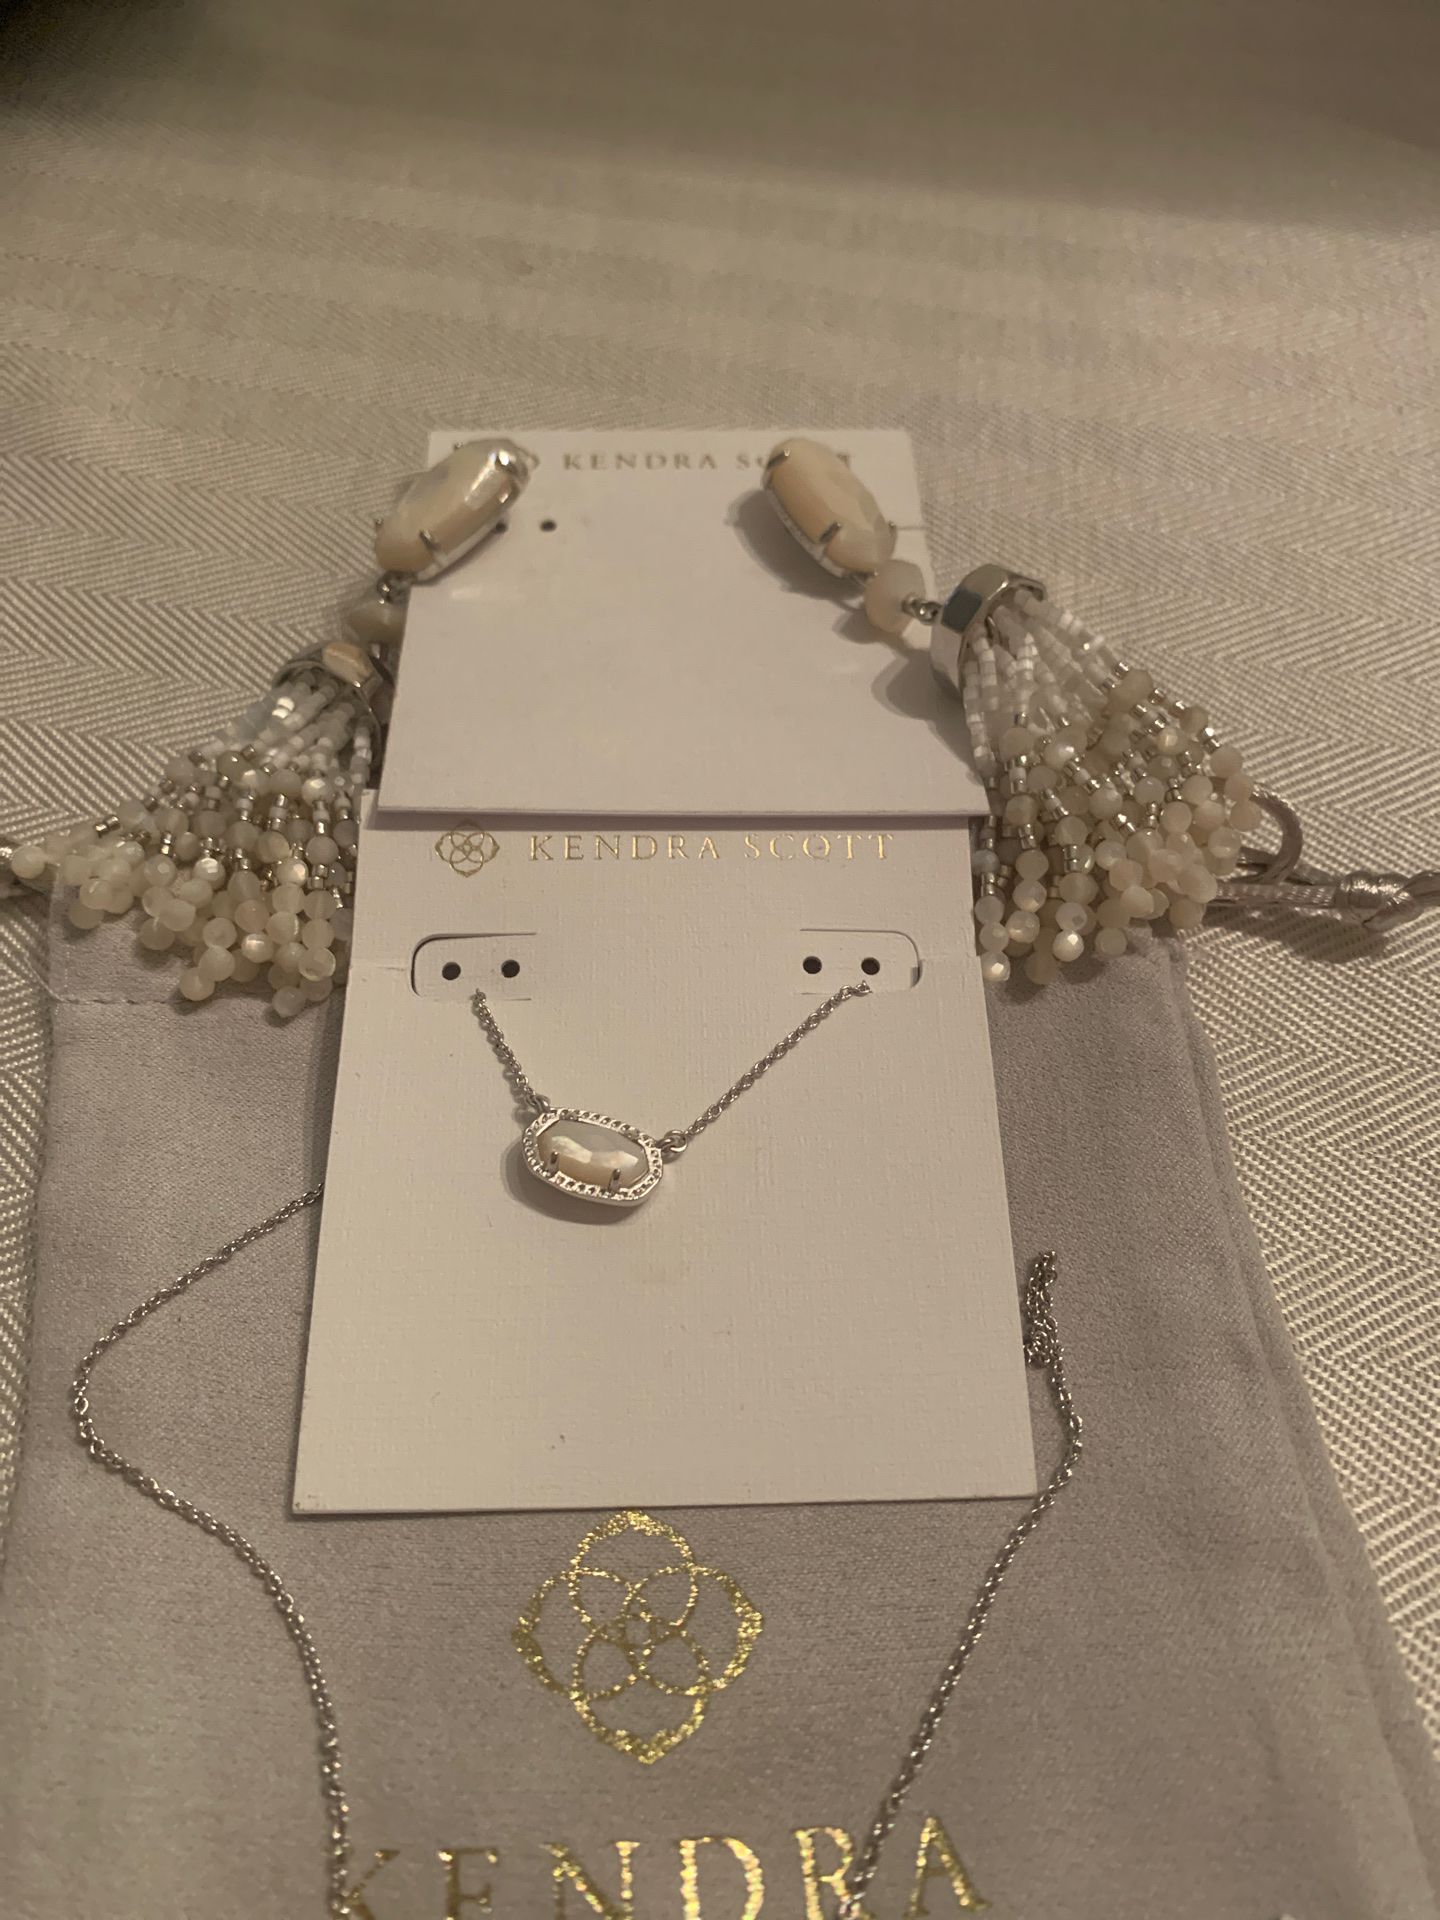 Kendra Scott Amber necklace, New